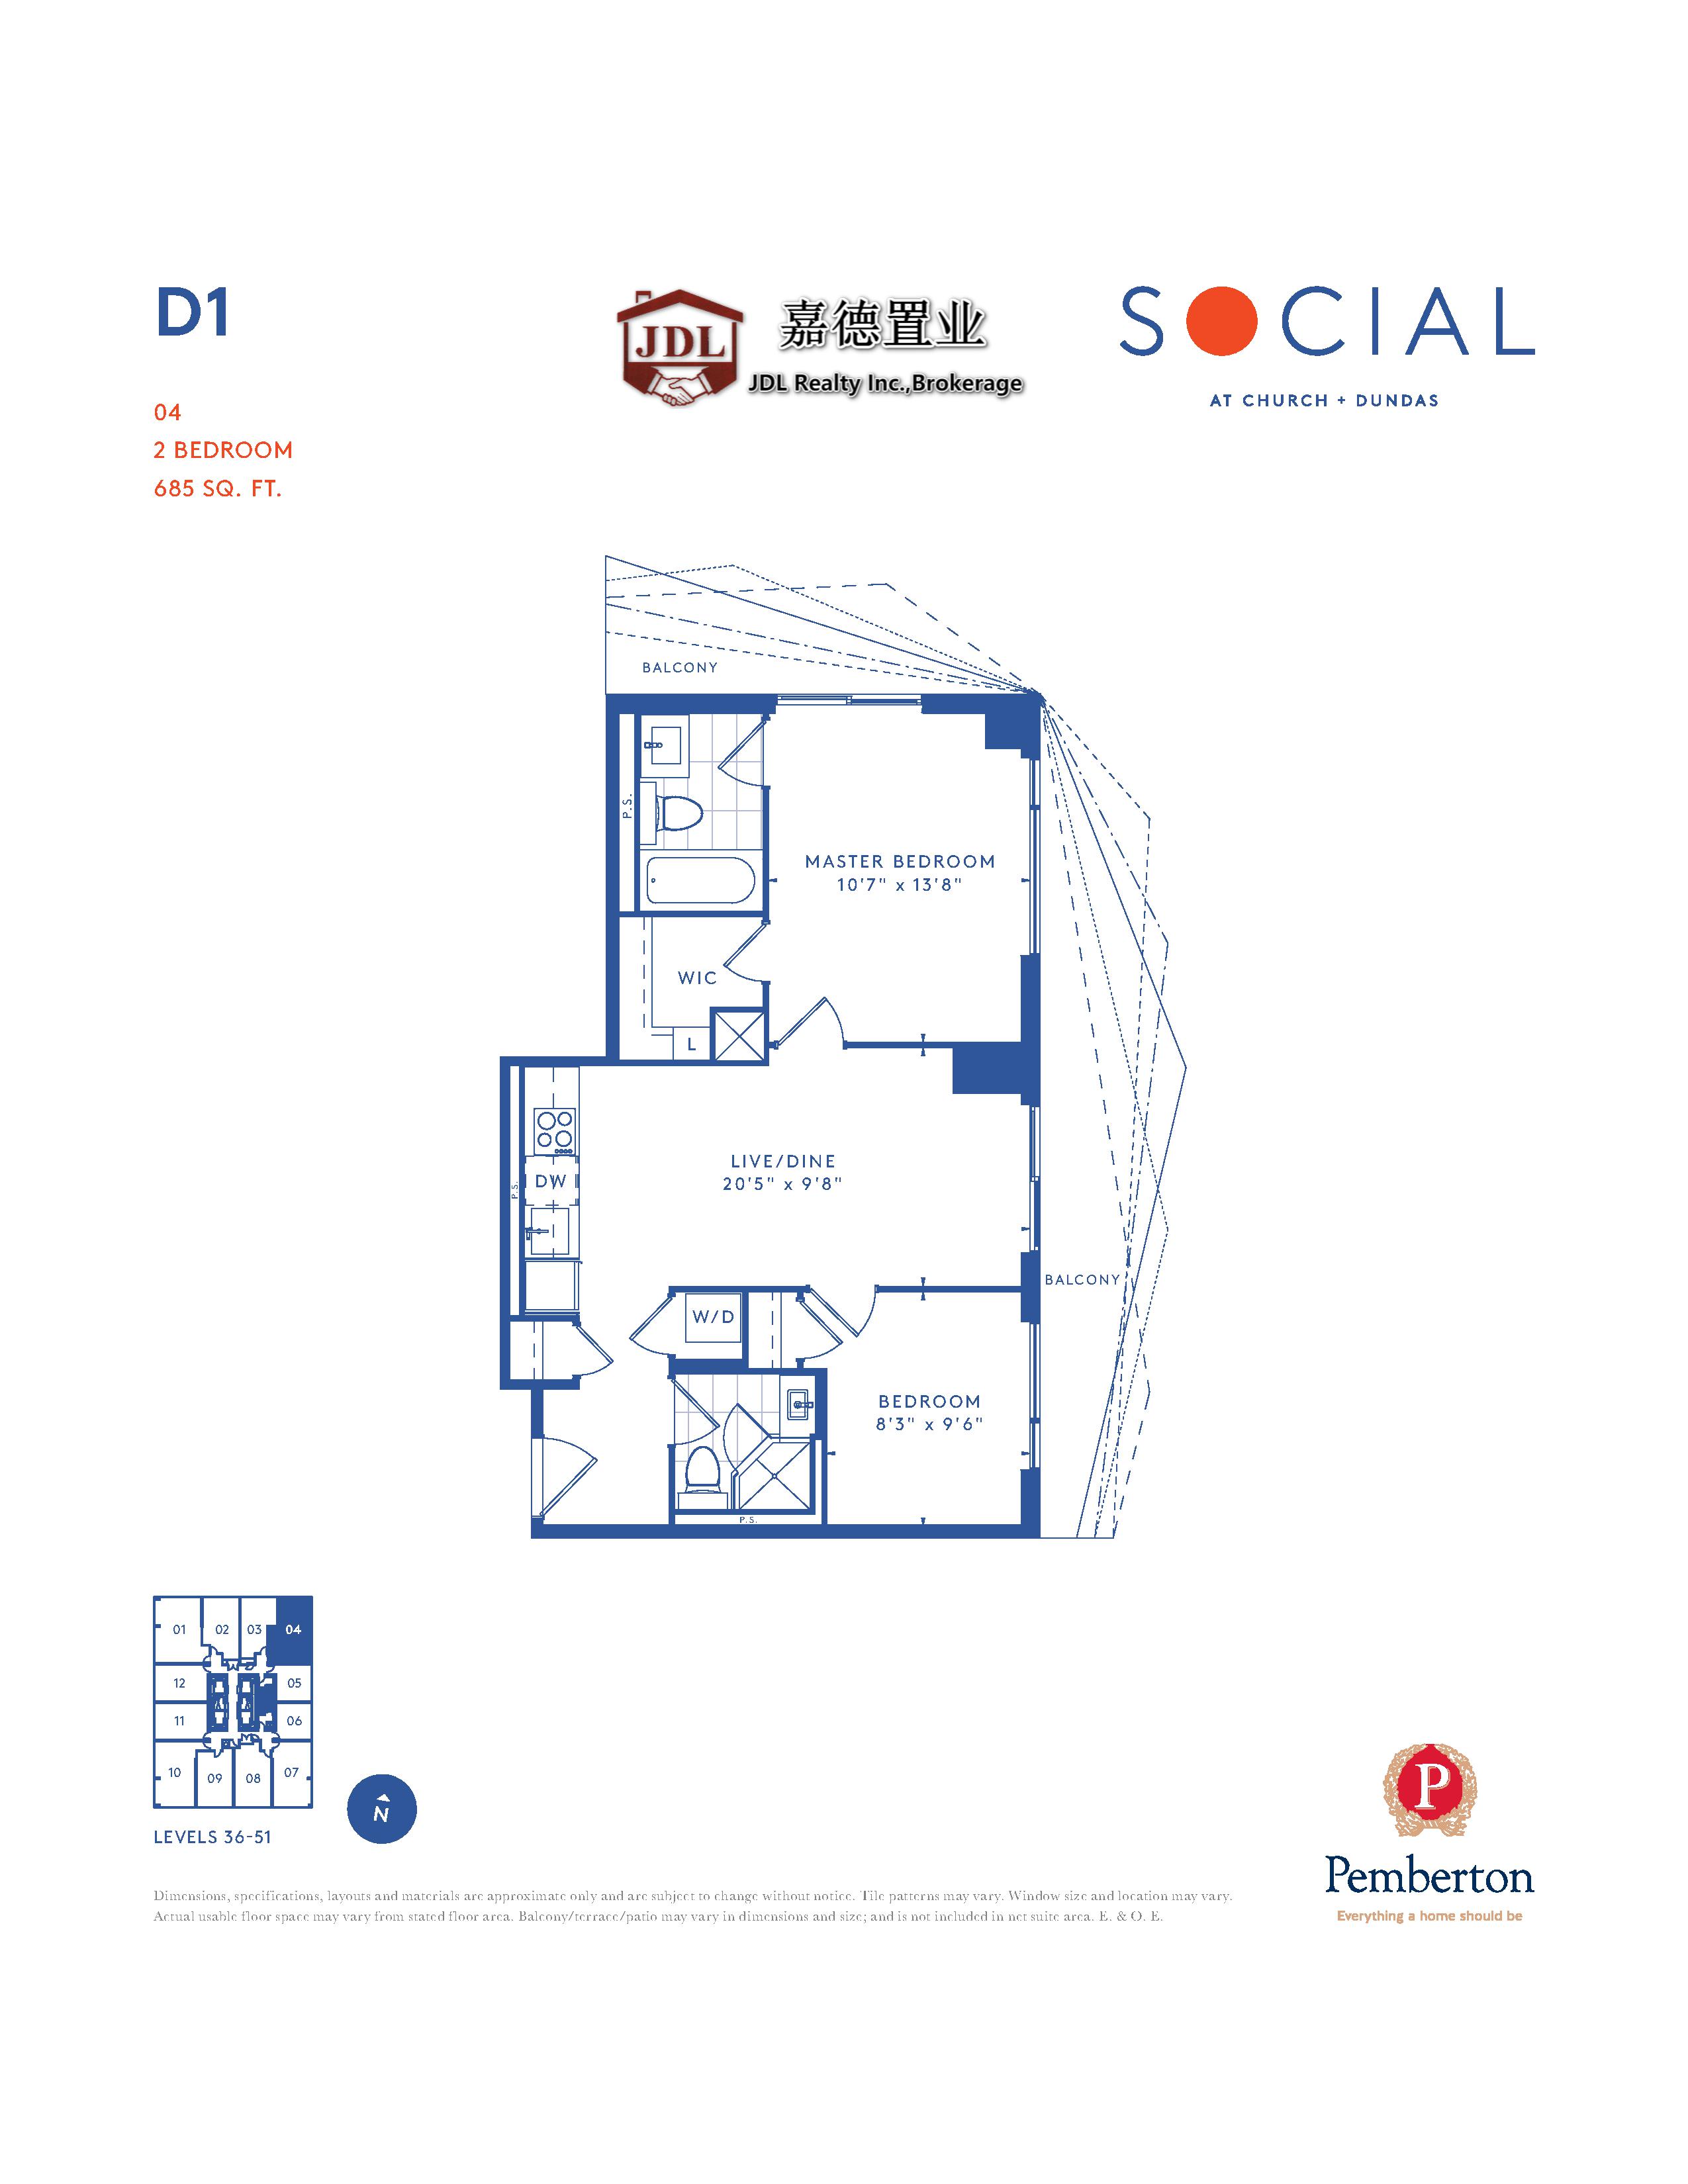 Social Tower floor plan 1 5